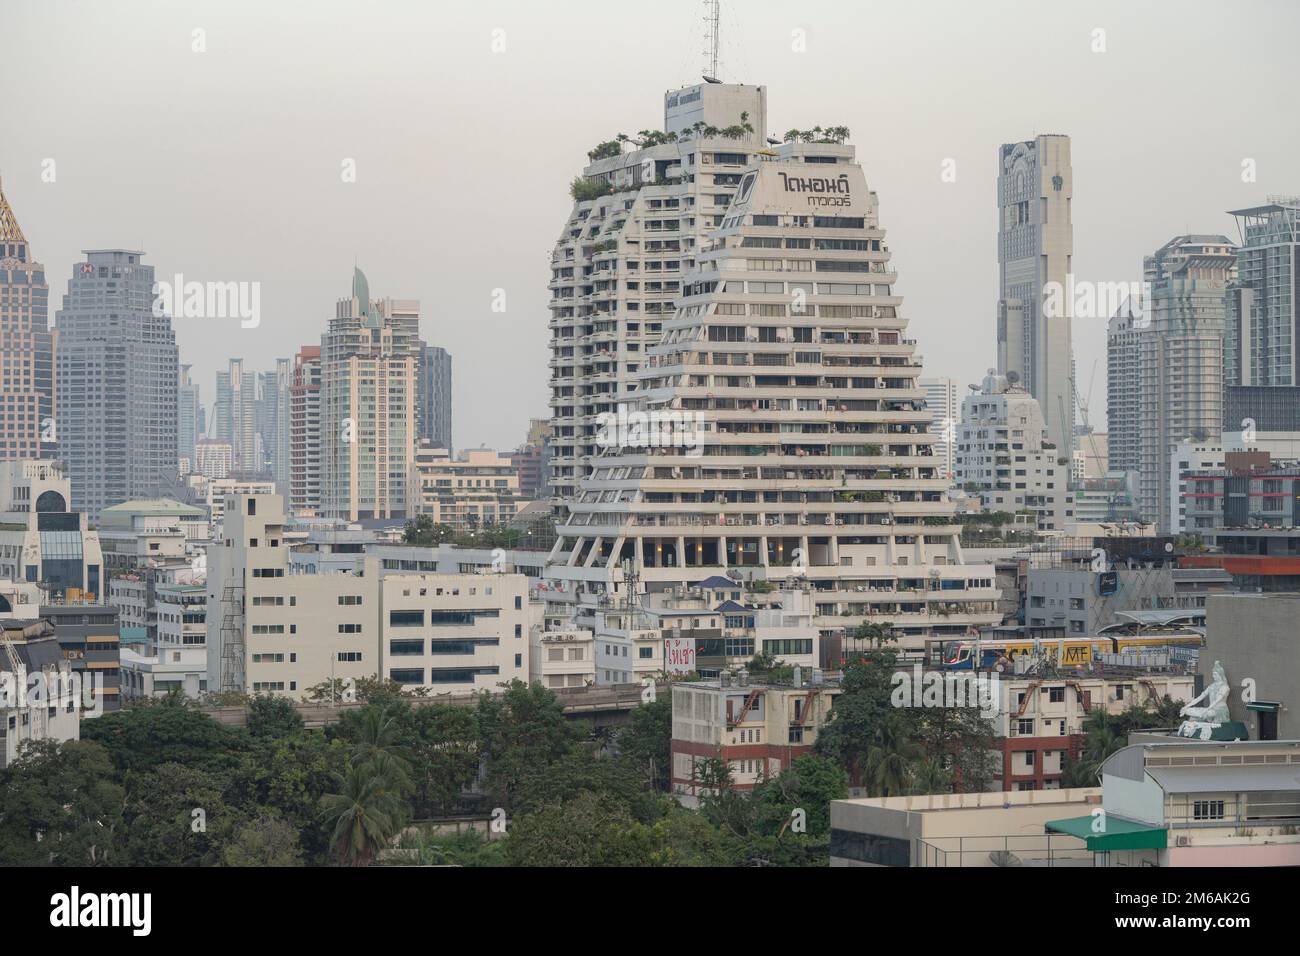 Heavy Smog Over Bangkok Skyline - Pollution In Megapolis Concept Stock Photo